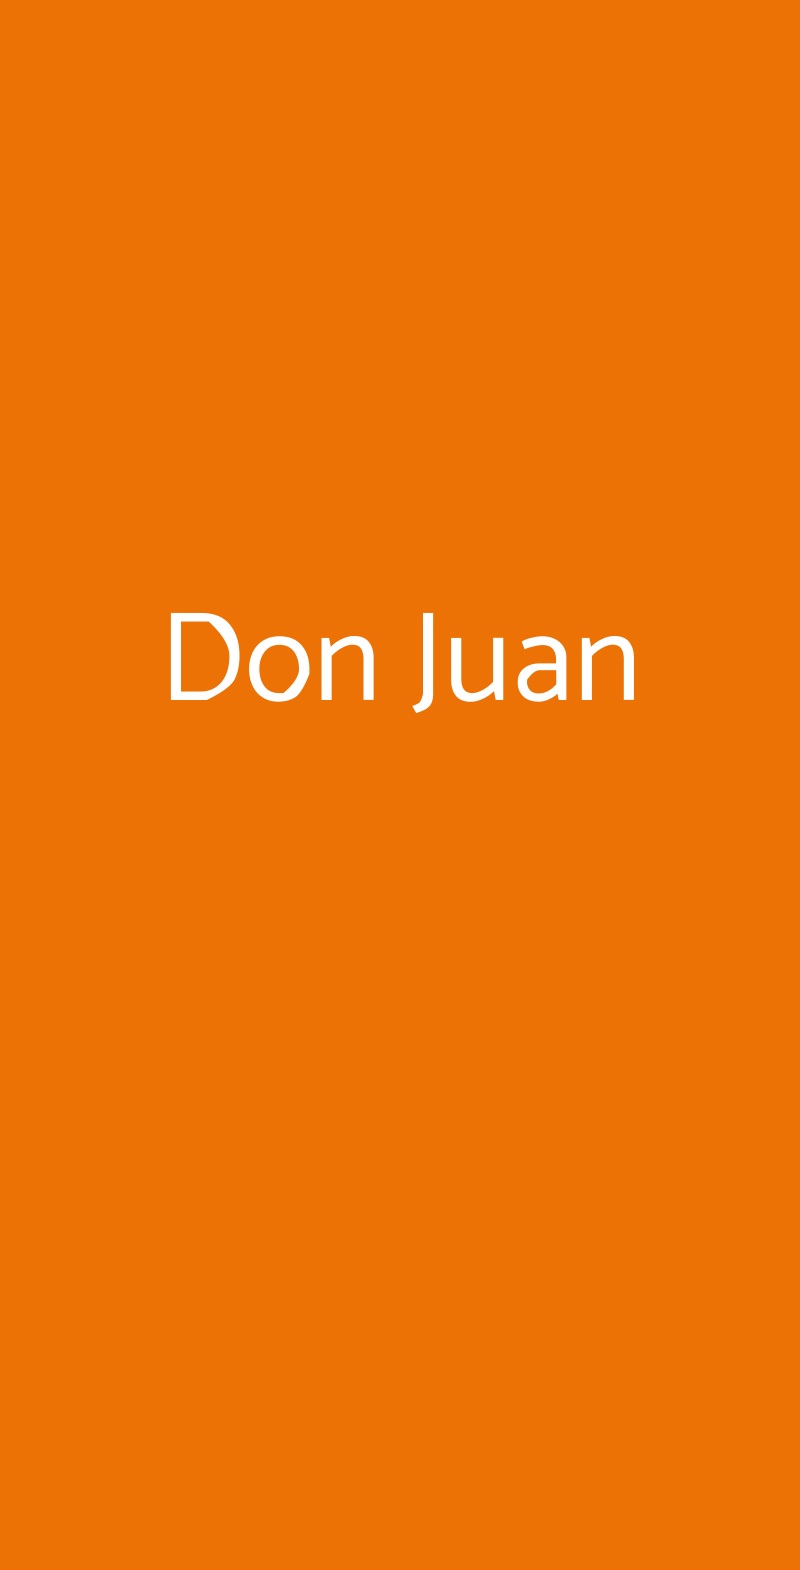 Don Juan Milano menù 1 pagina